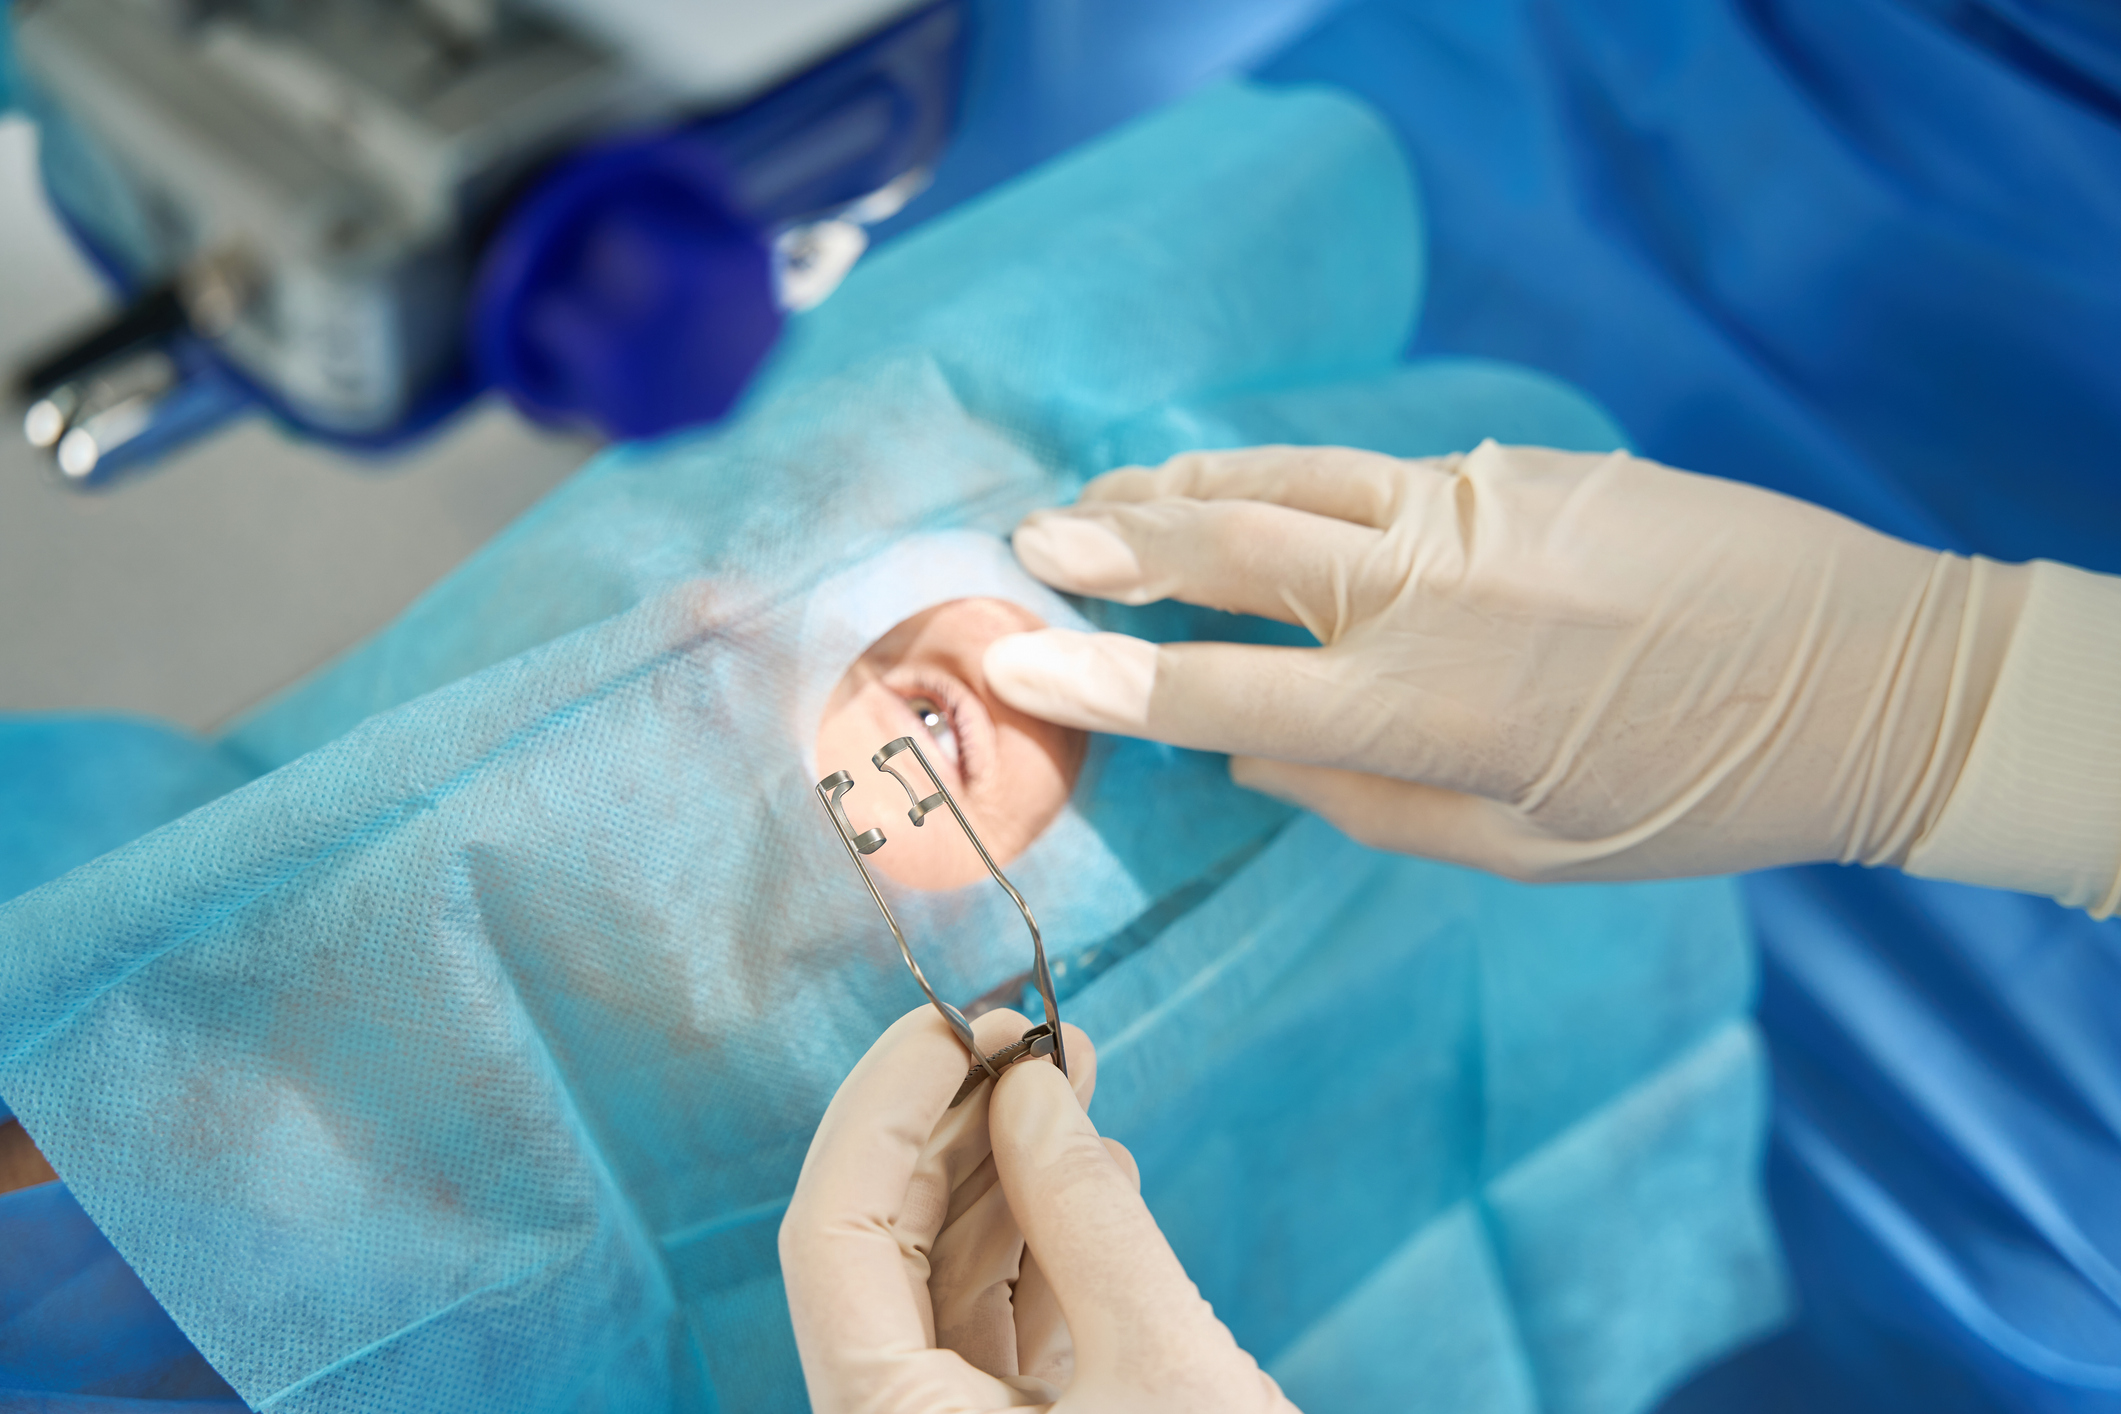 Scleral Buckling Surgery for Retinal Detachment Repair